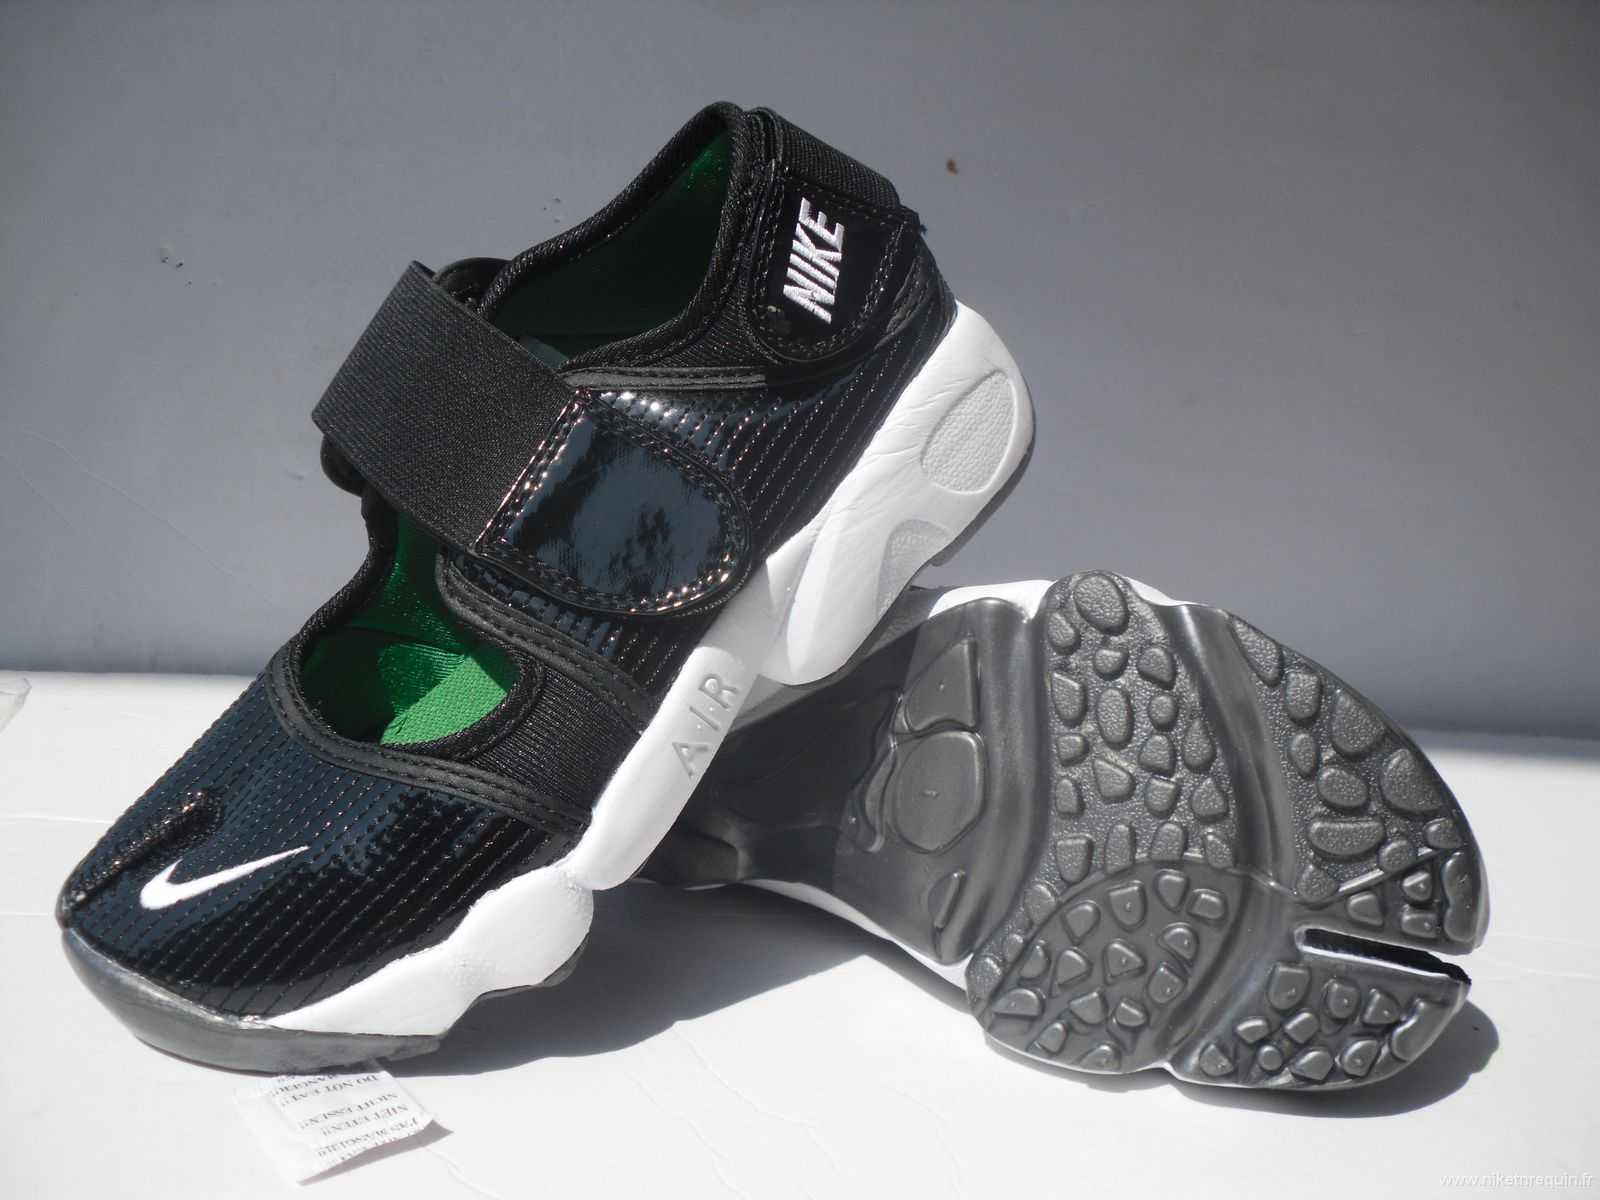 Nouveau Modele De Chaussures Nike Rift Beaty Shox Noir